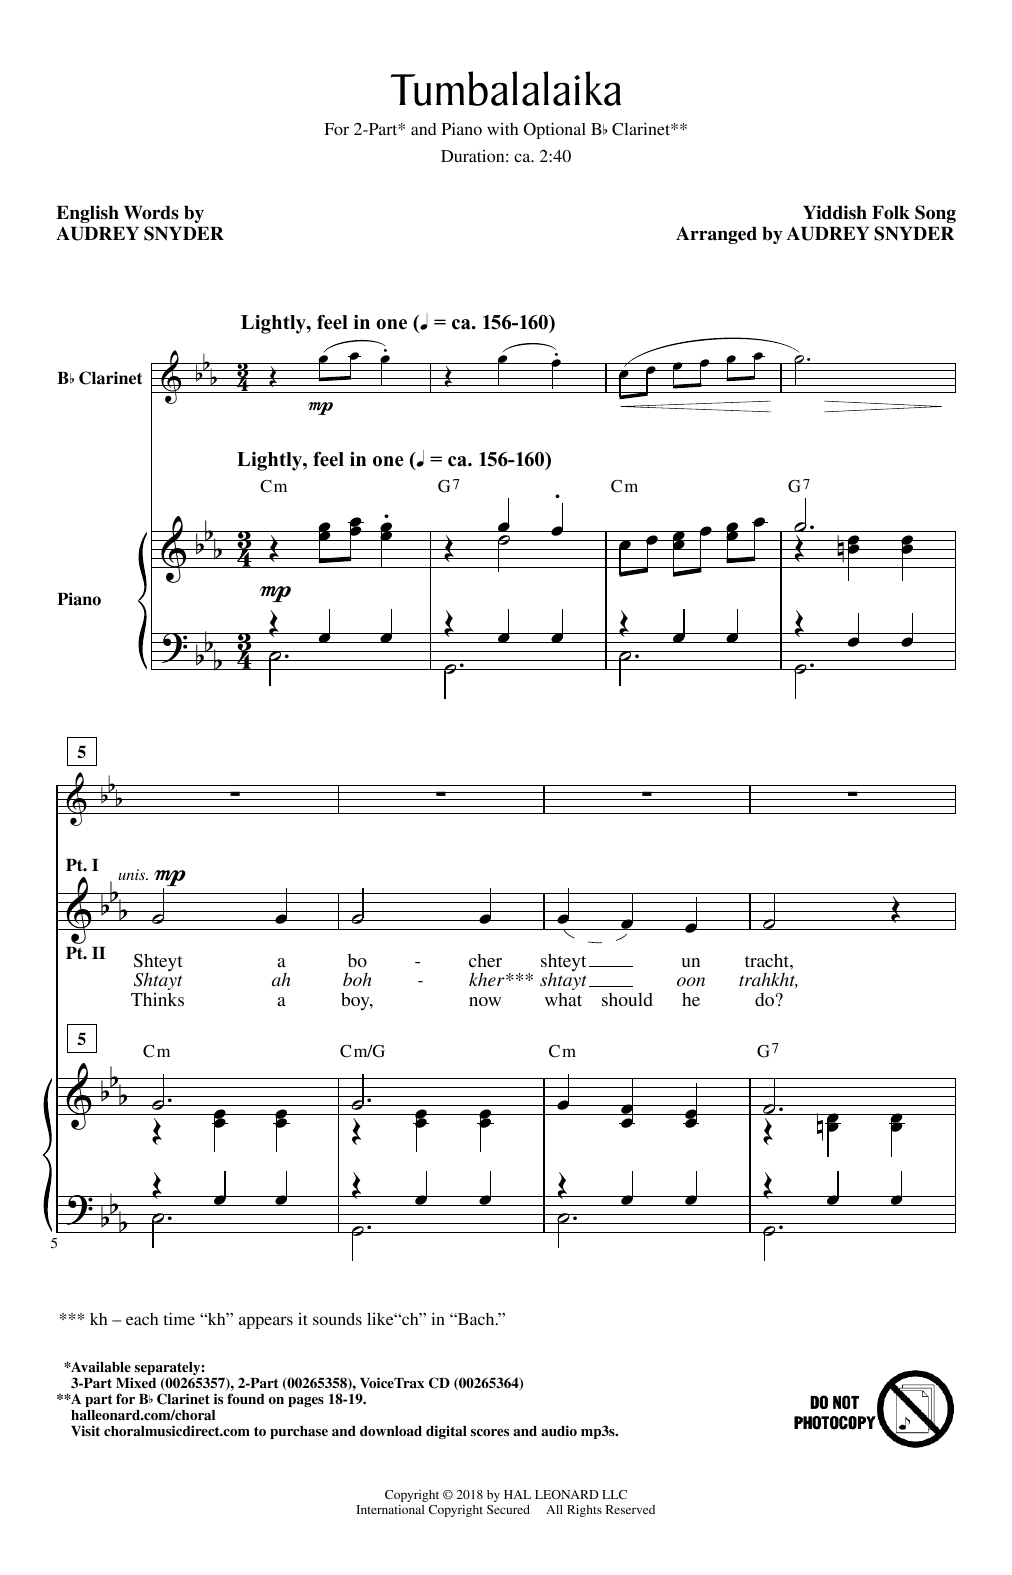 Audrey Snyder Tumbalalaika Sheet Music Notes & Chords for 3-Part Mixed - Download or Print PDF